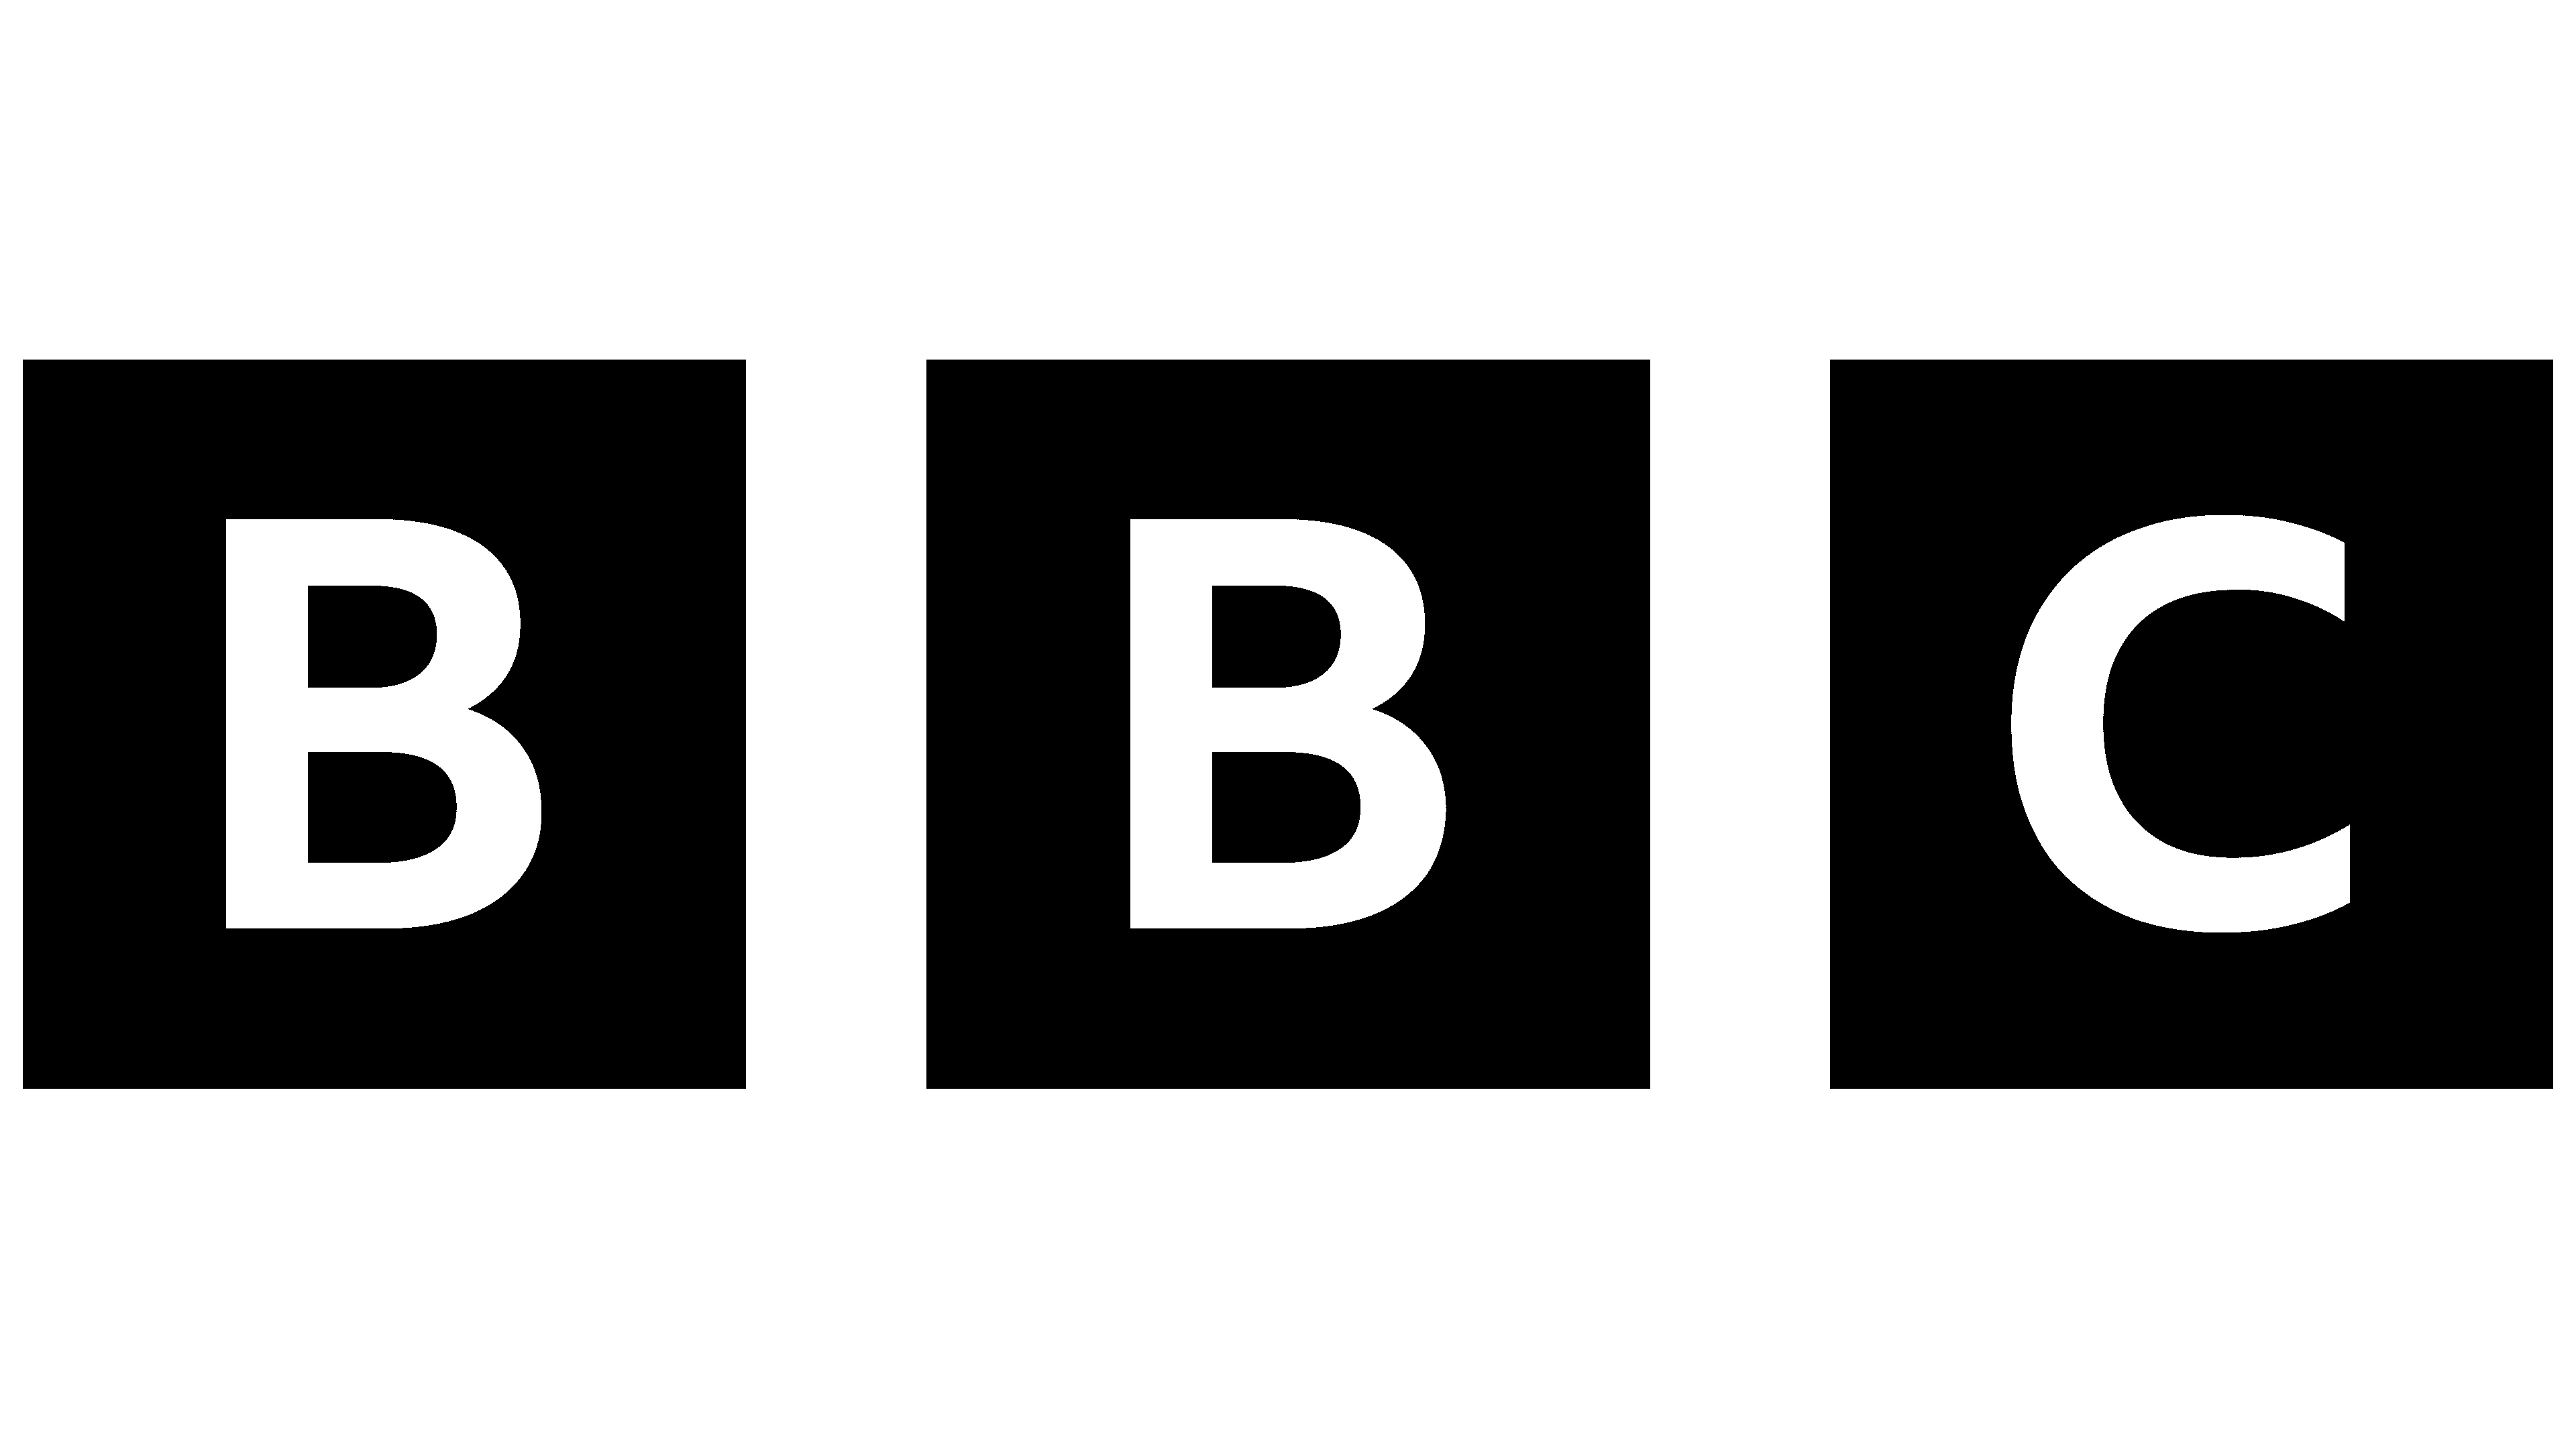 BBC-Logo (1)